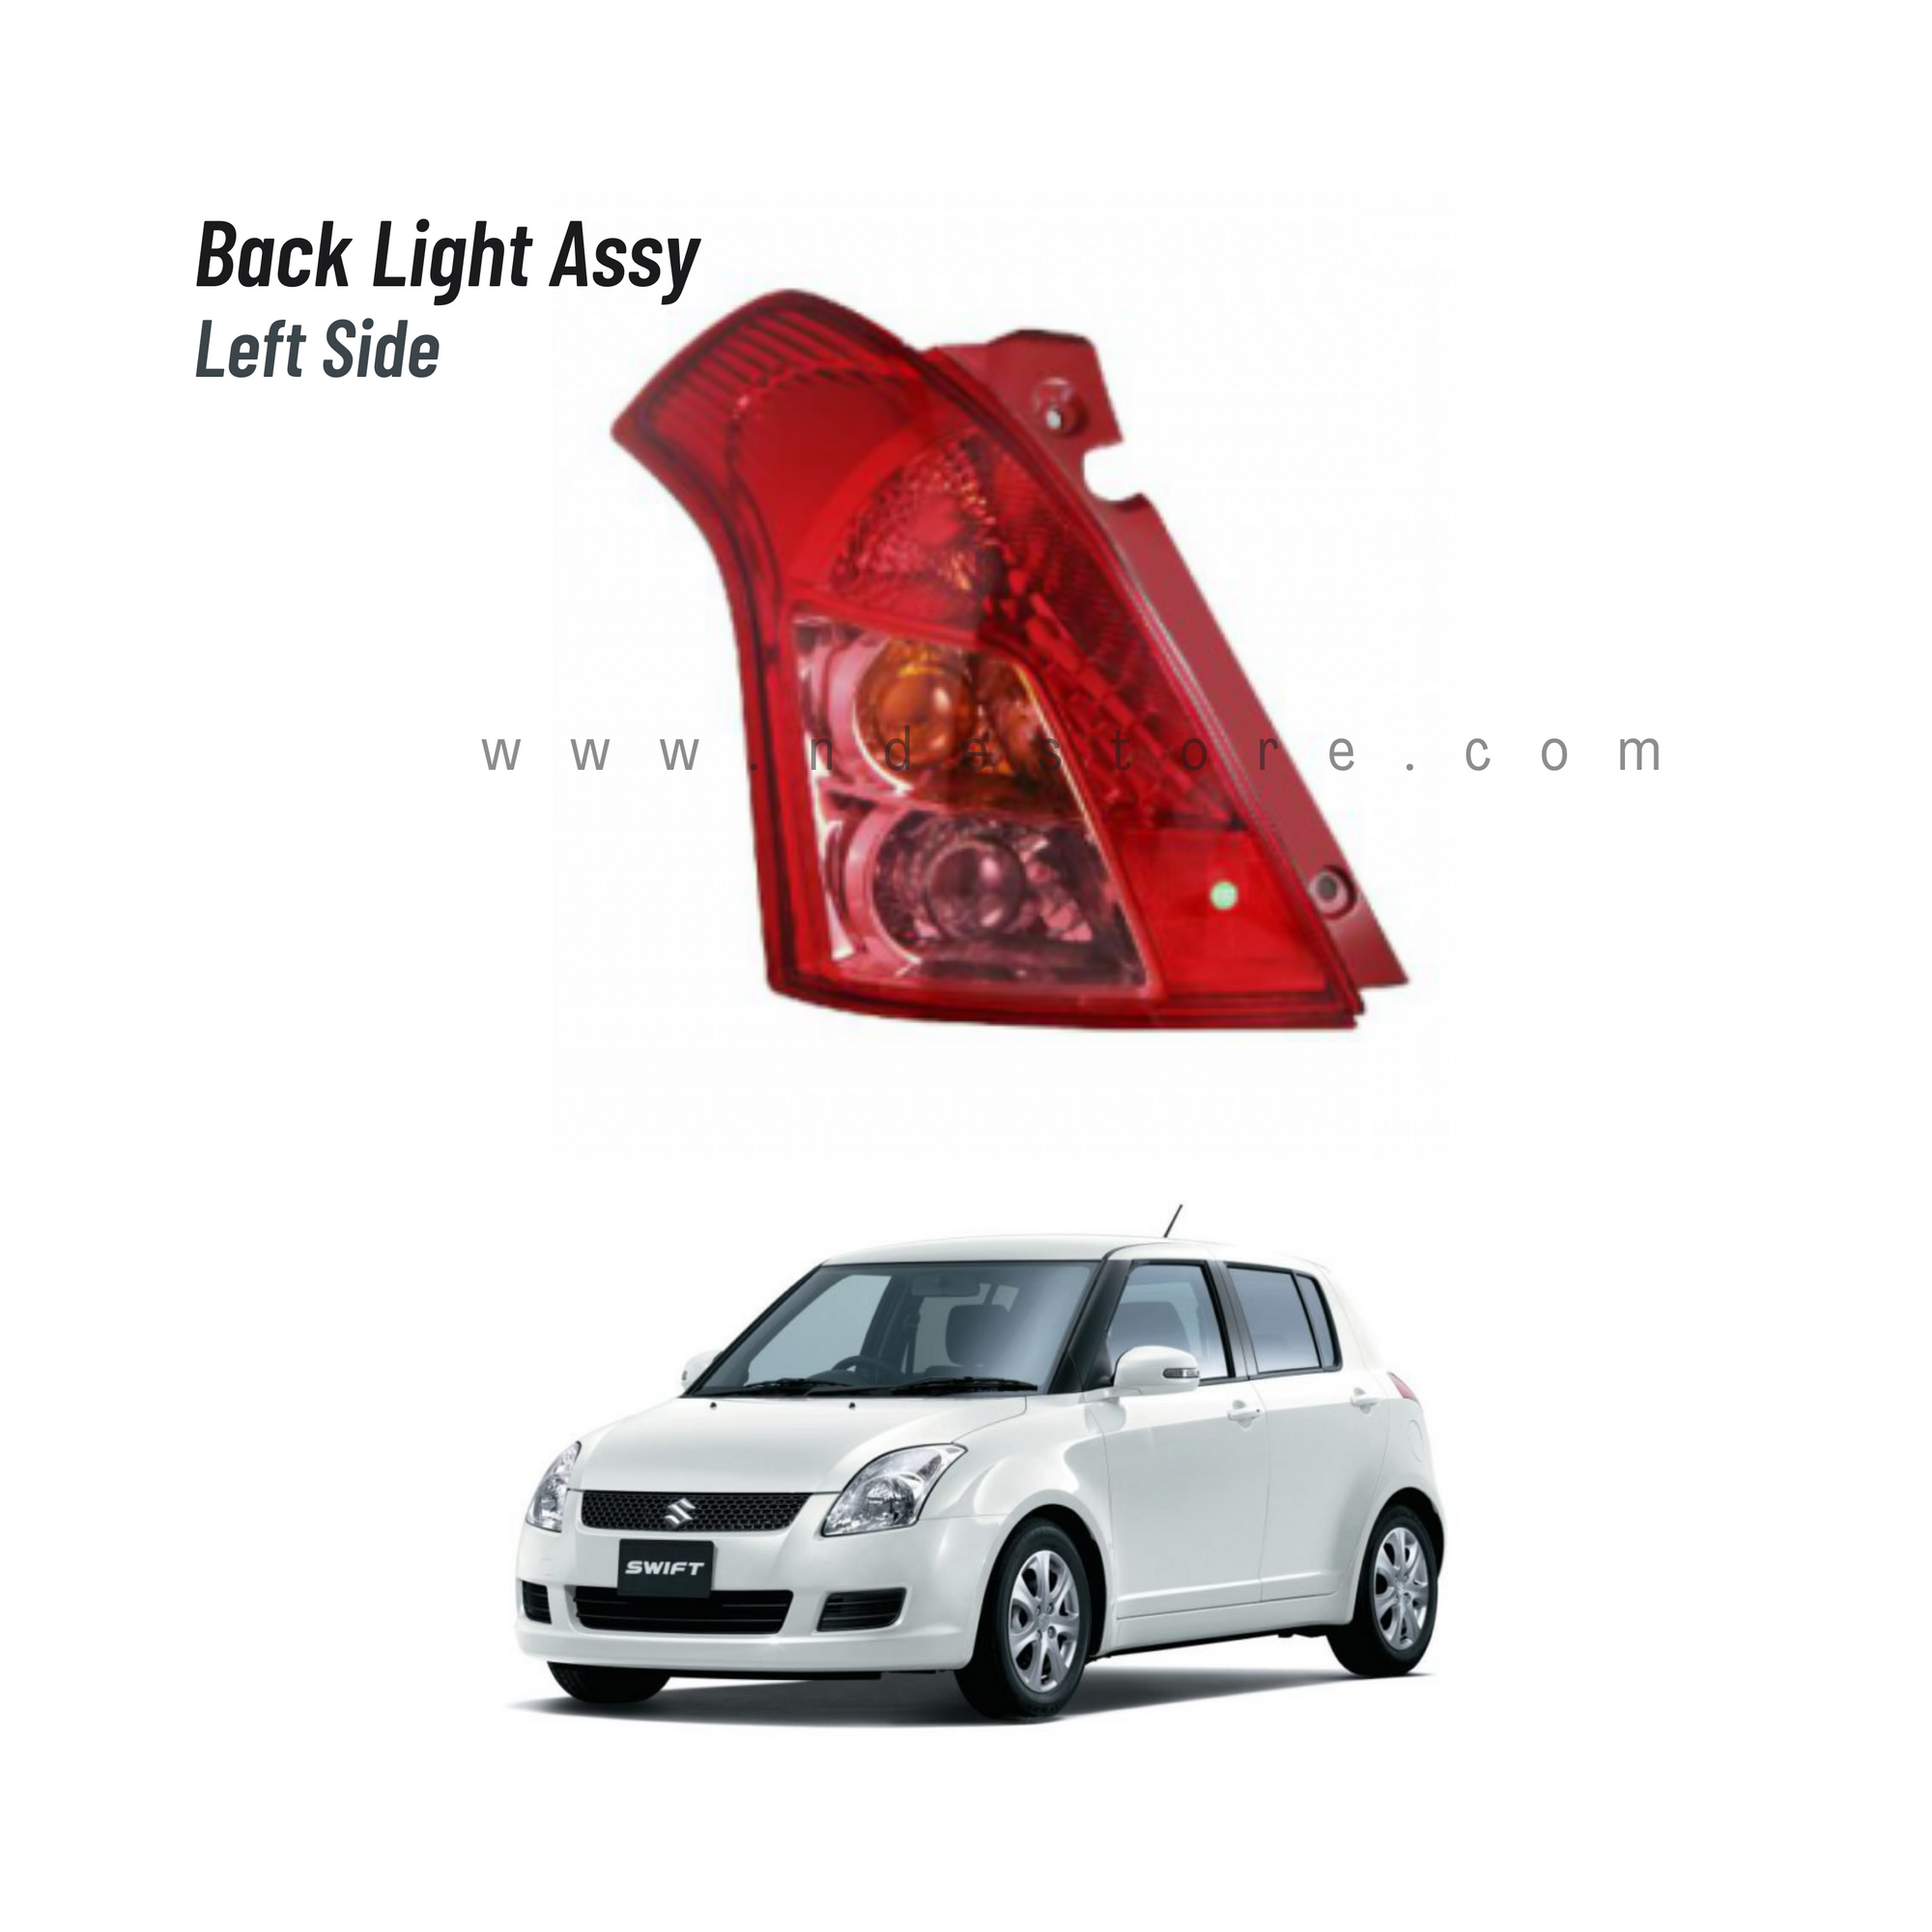 BACK LIGHT ASSY GENUINE FOR SUZUKI SWIFT (2010-2020)